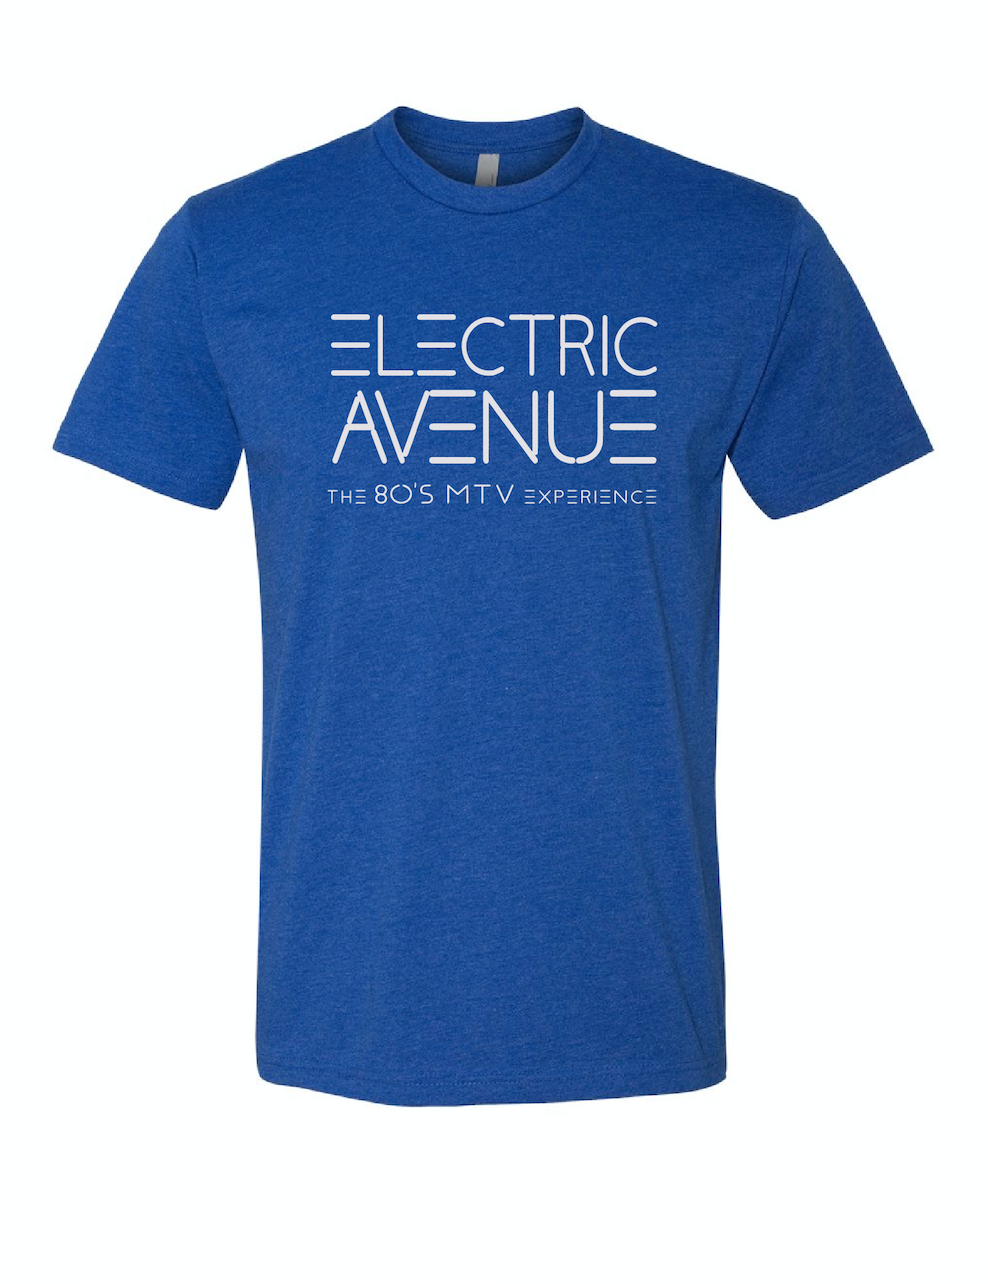 Electric Avenue - Blue/White or Black/Silver